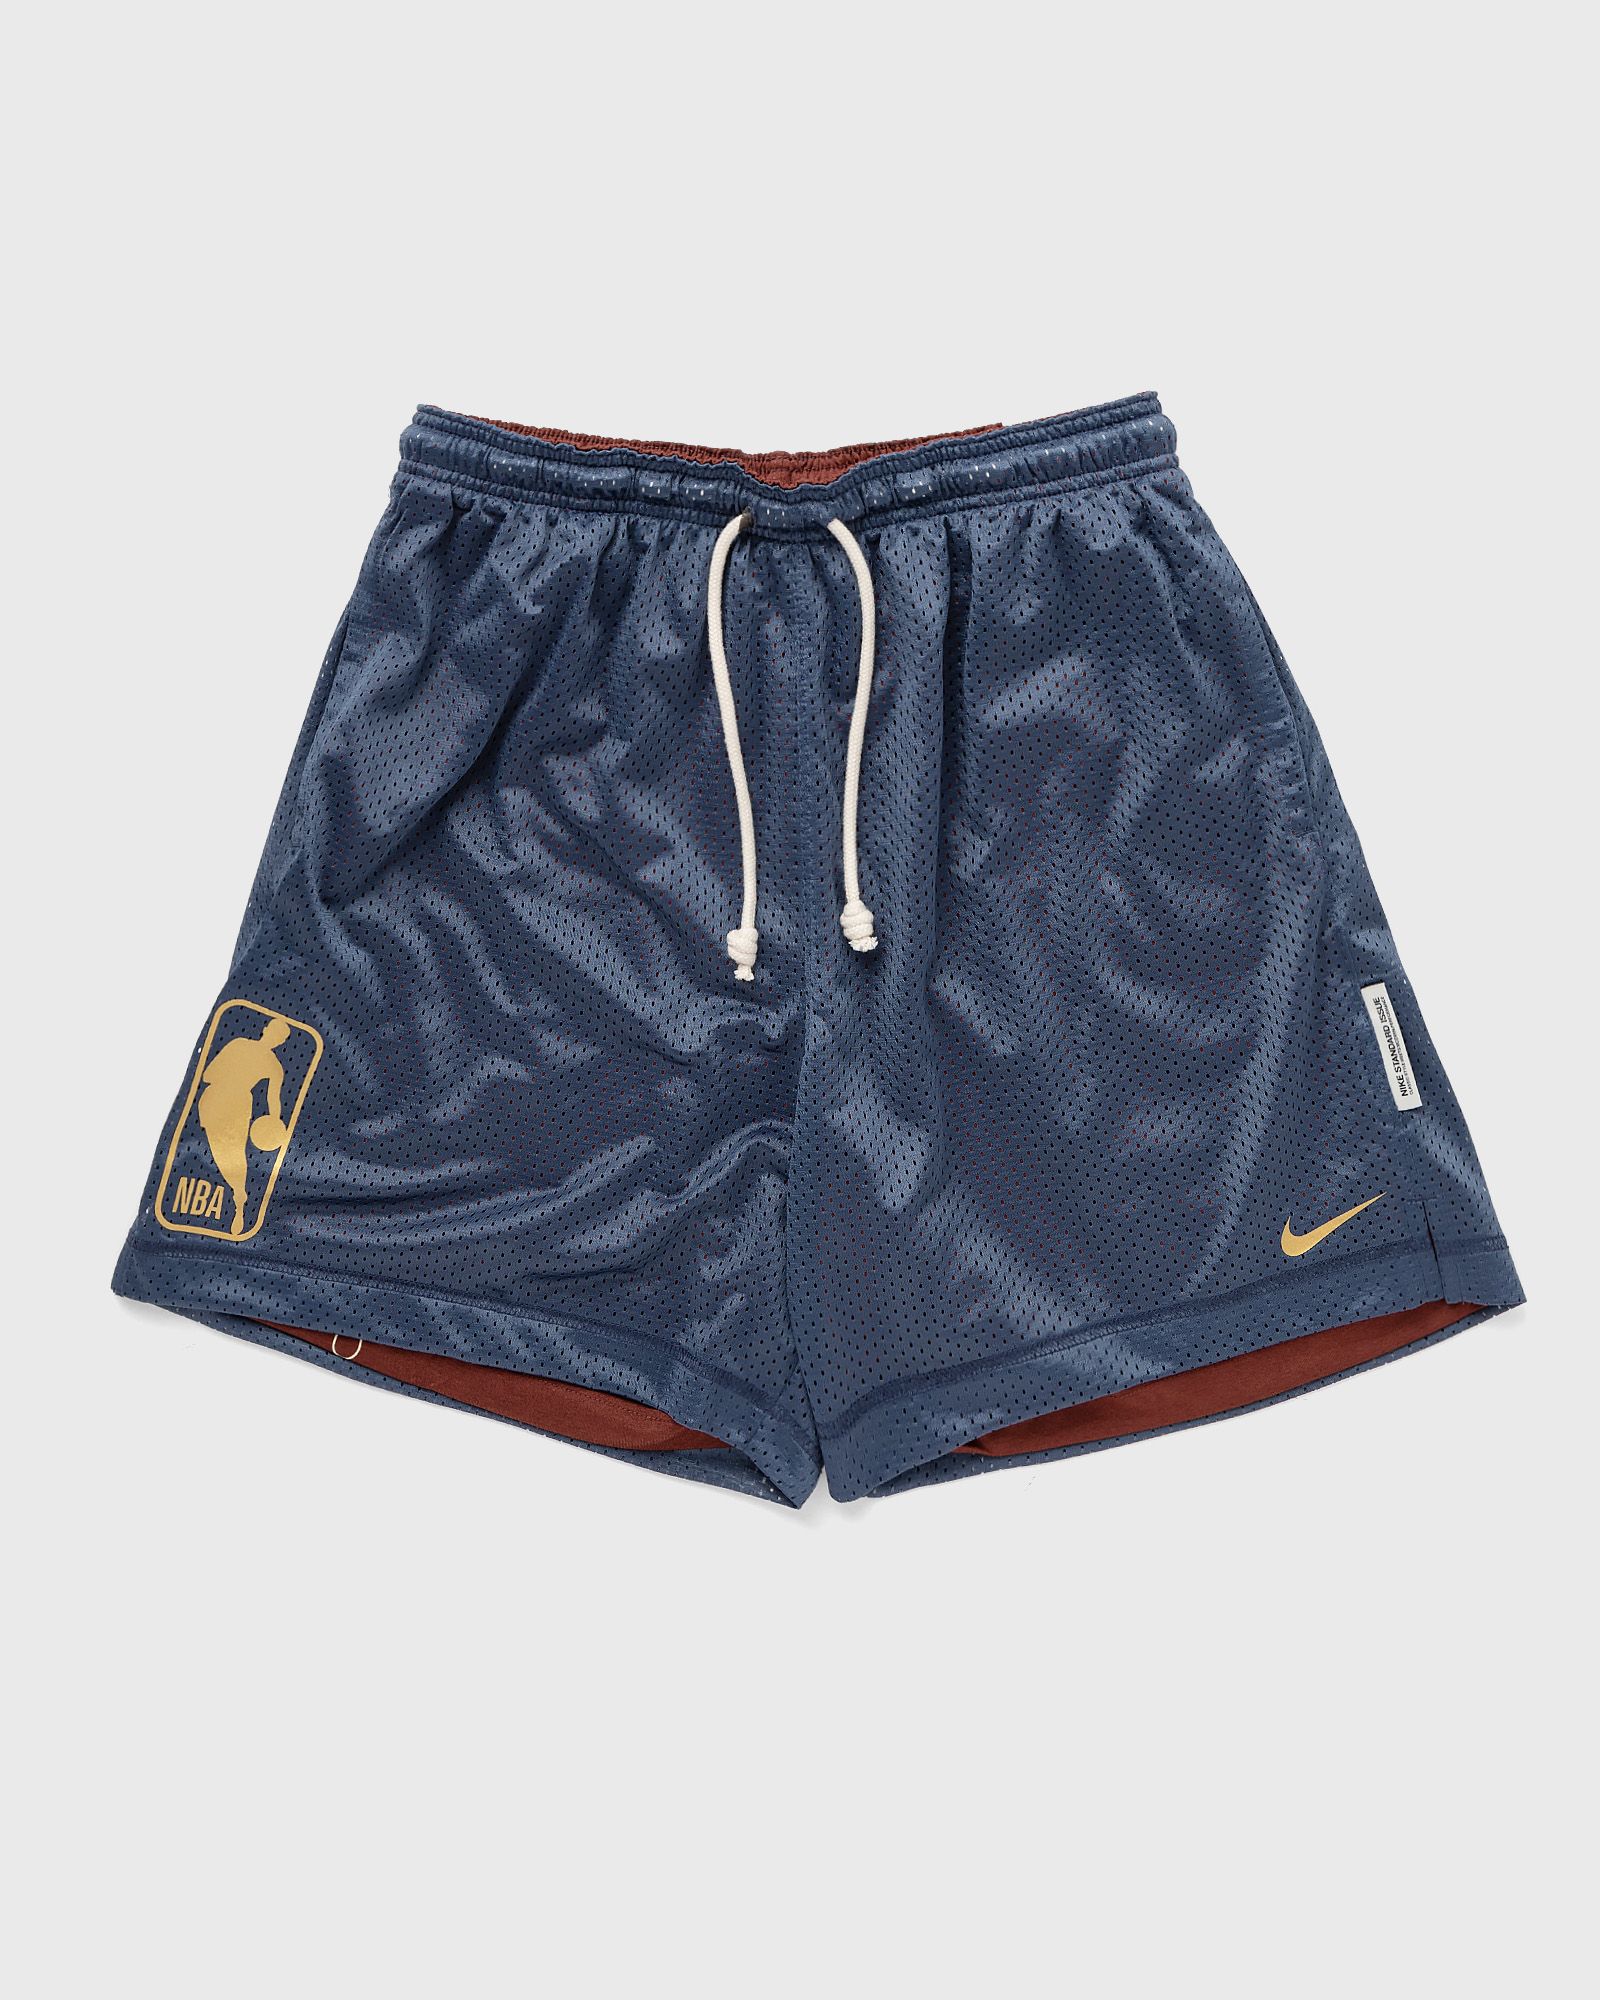 Nike - team 31 standard issue reversible shorts men sport & team shorts blue in größe:xl